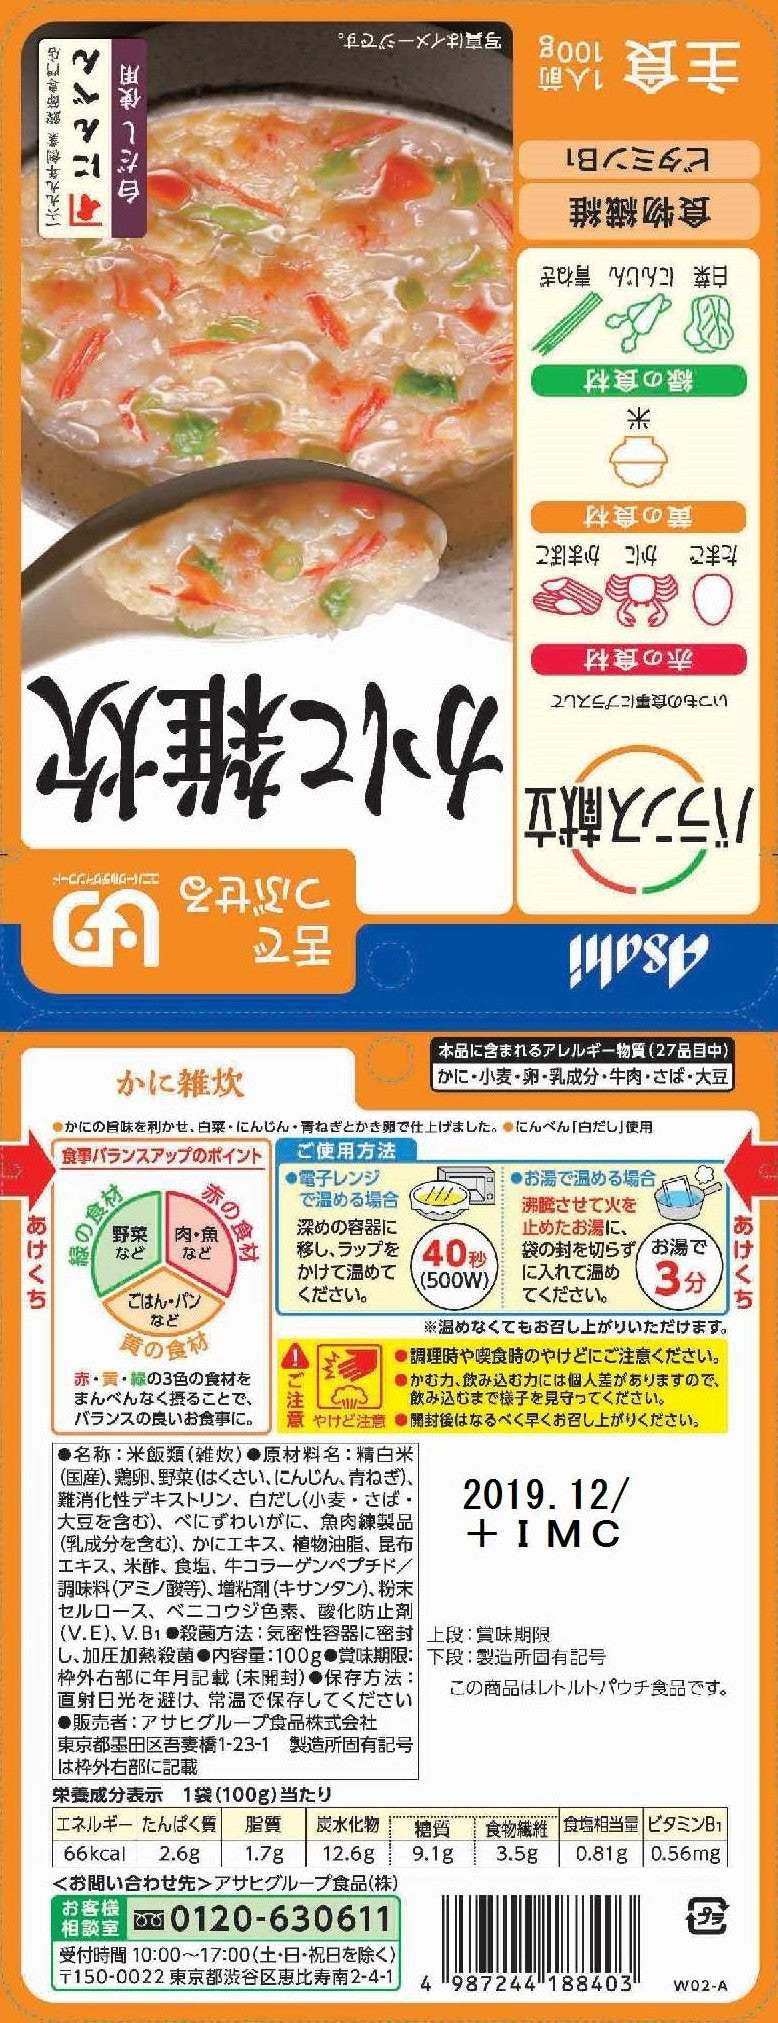 ◆Asahi group food balance menu crab rice porridge 100g